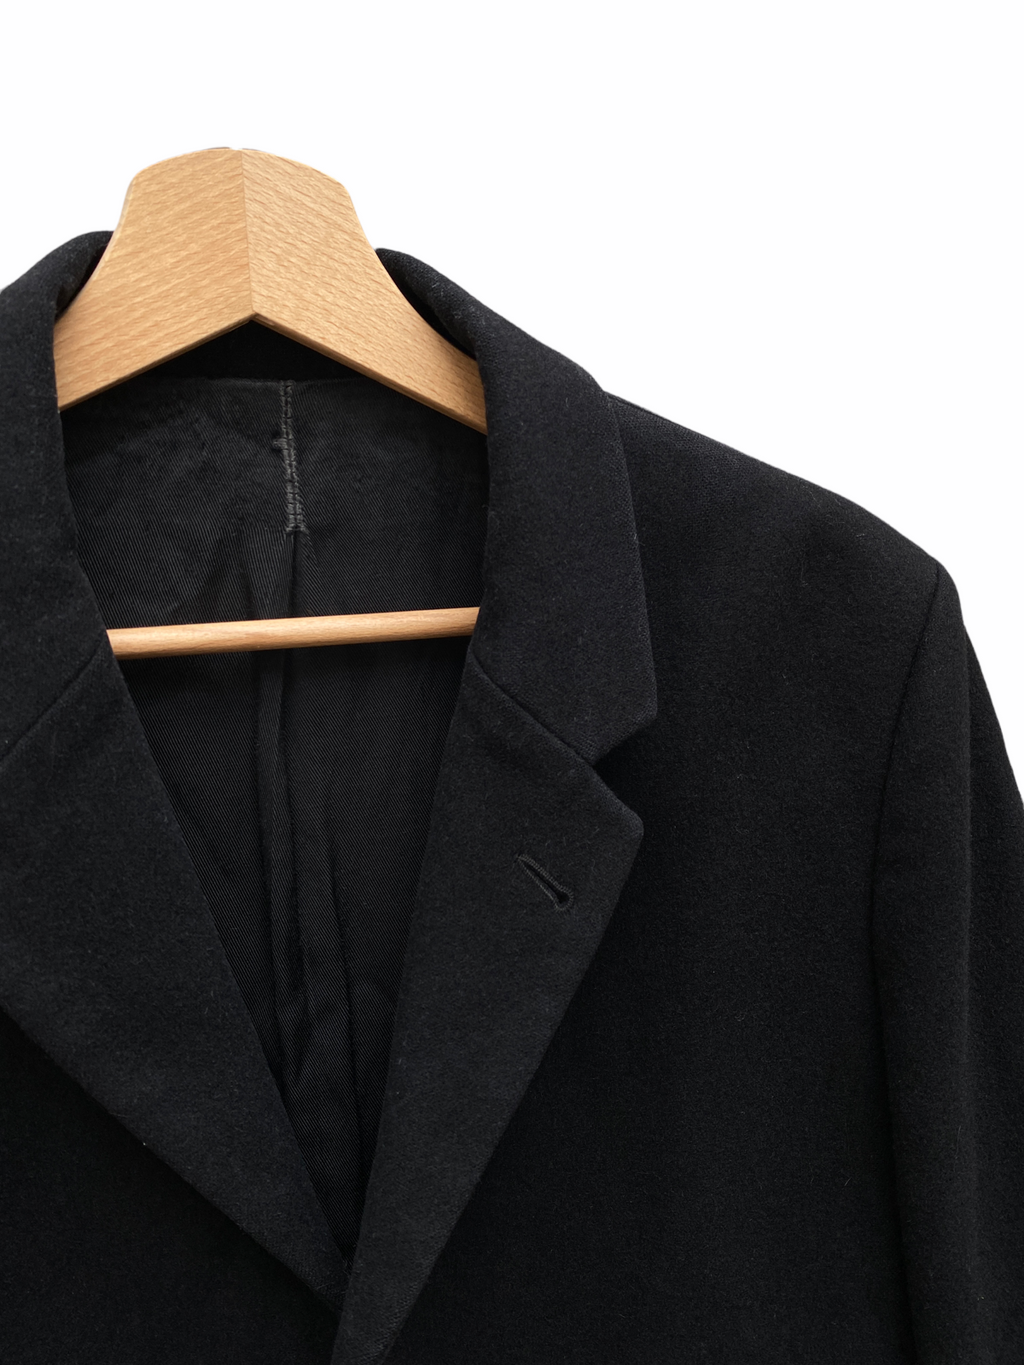 Black wool Coat Jacket